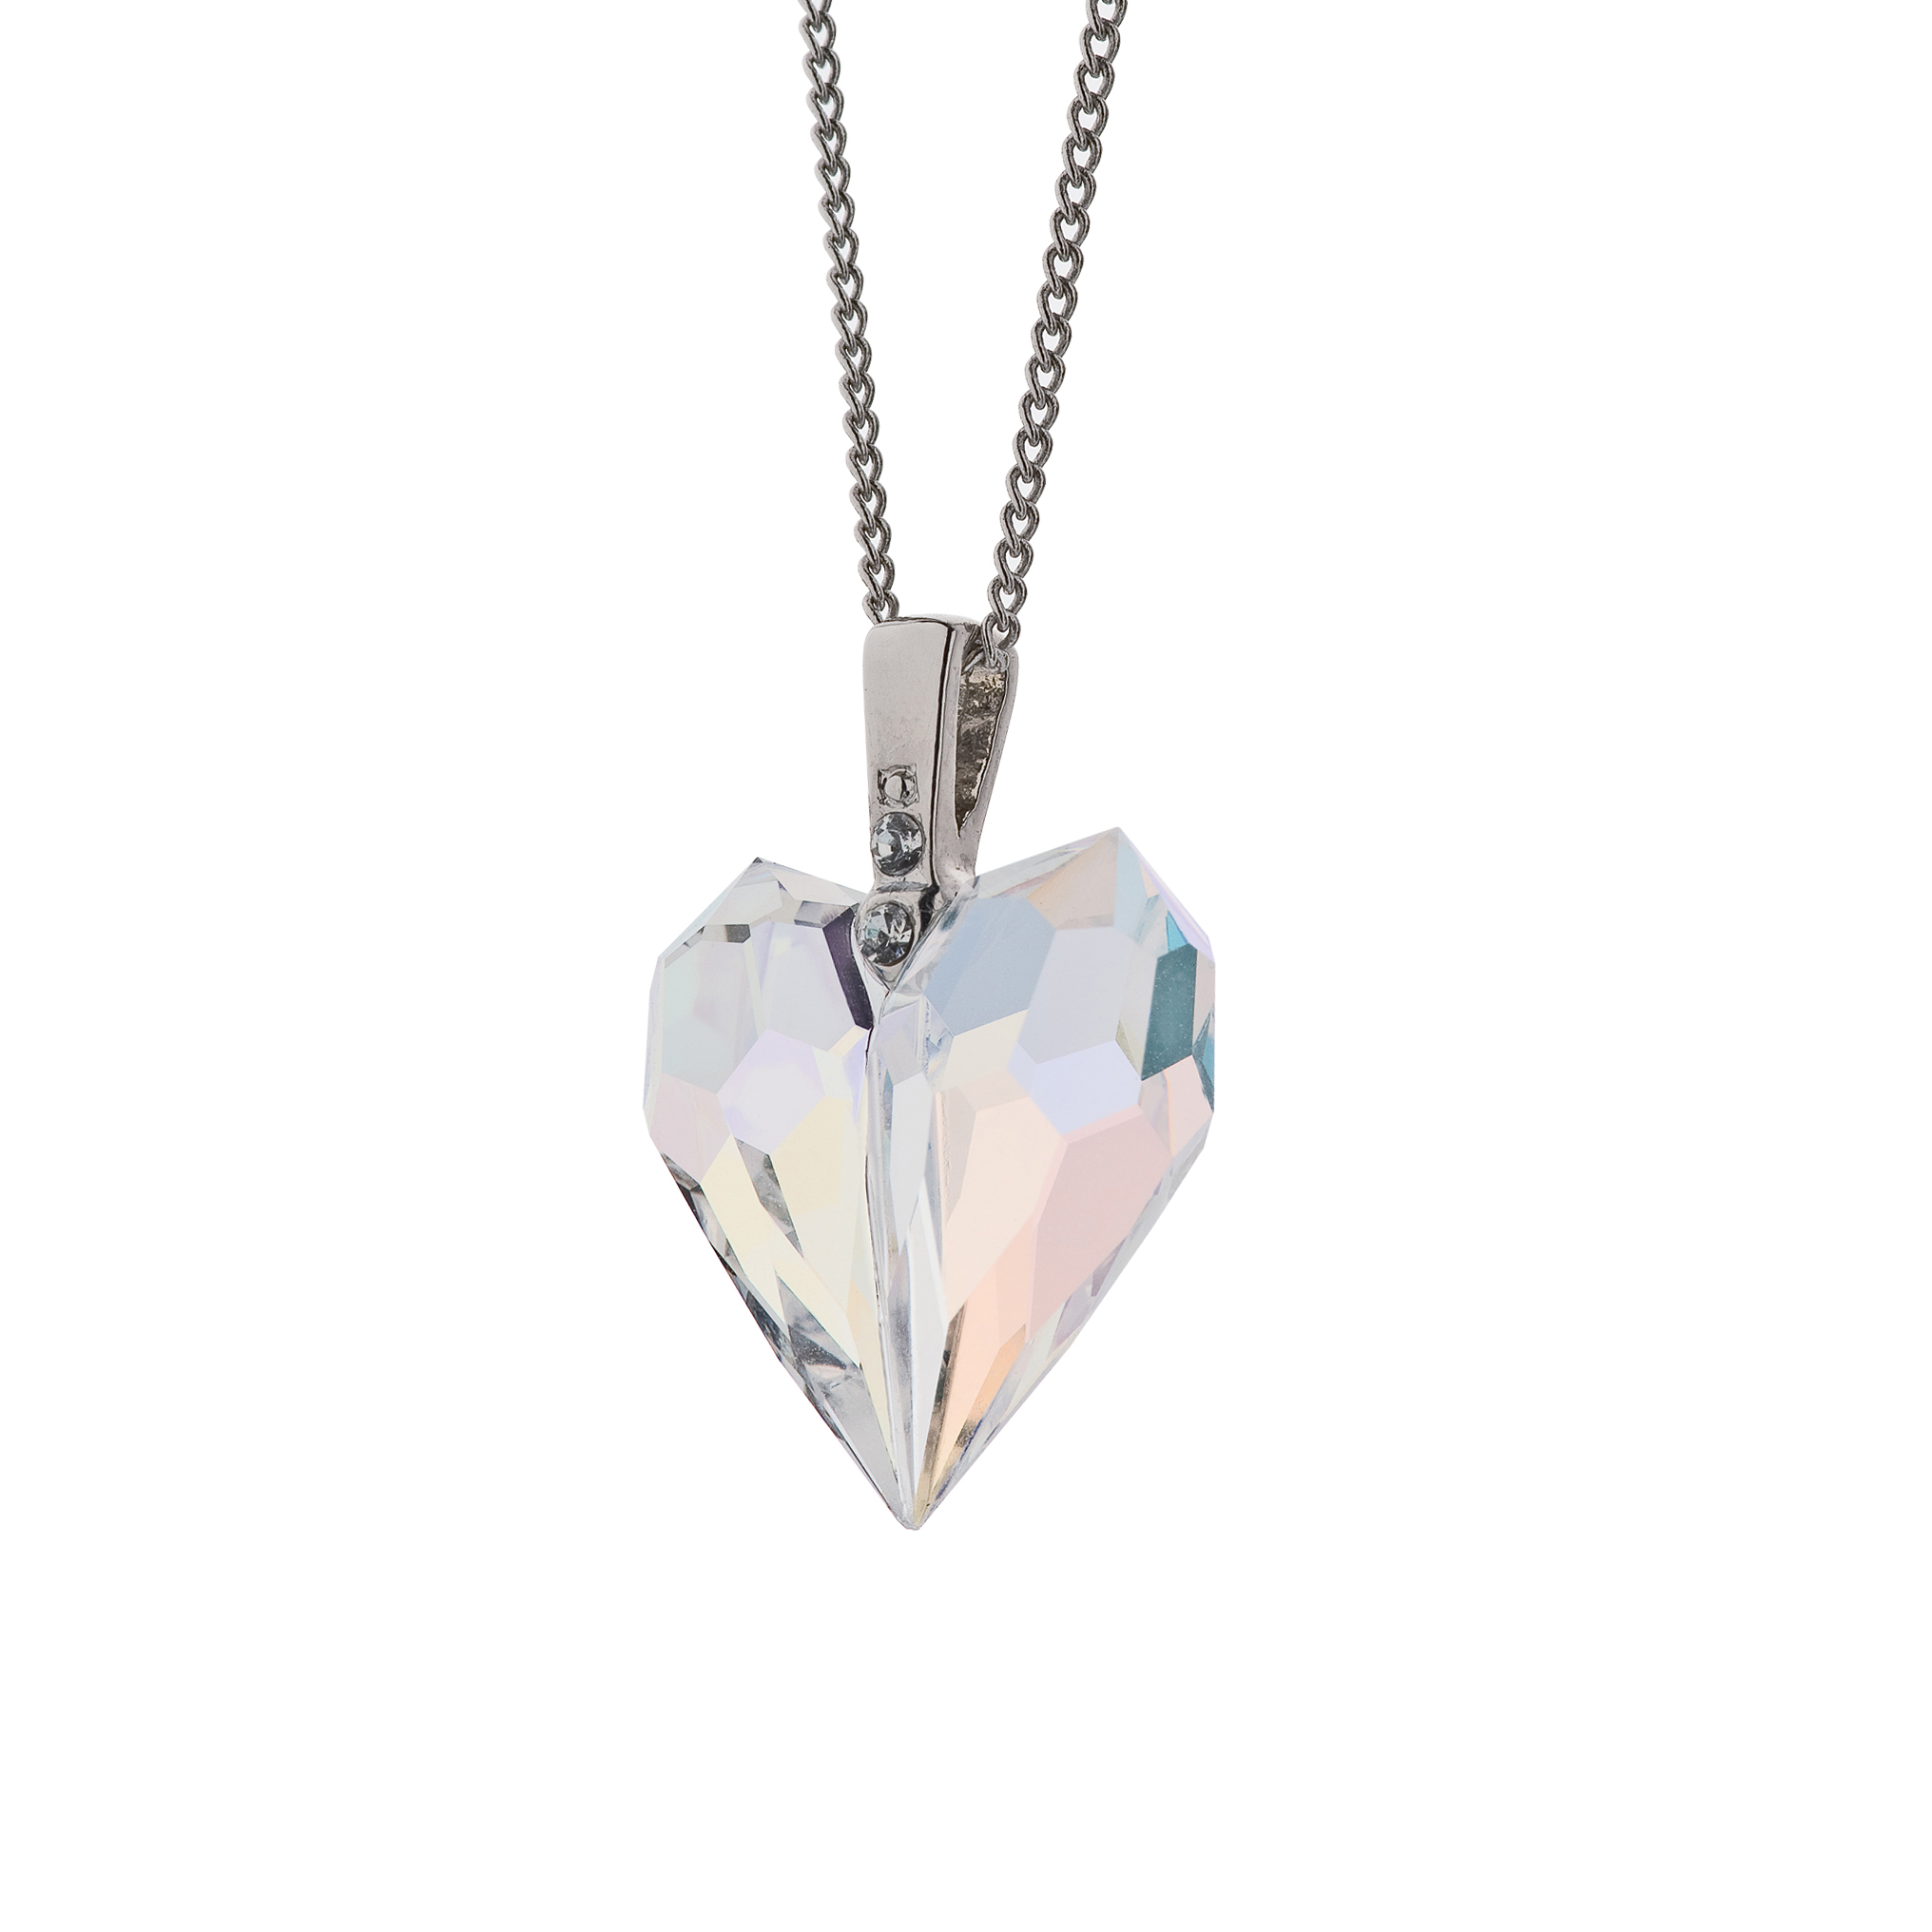 #86 Beautiful Diamond And Crystal Heart Pendant